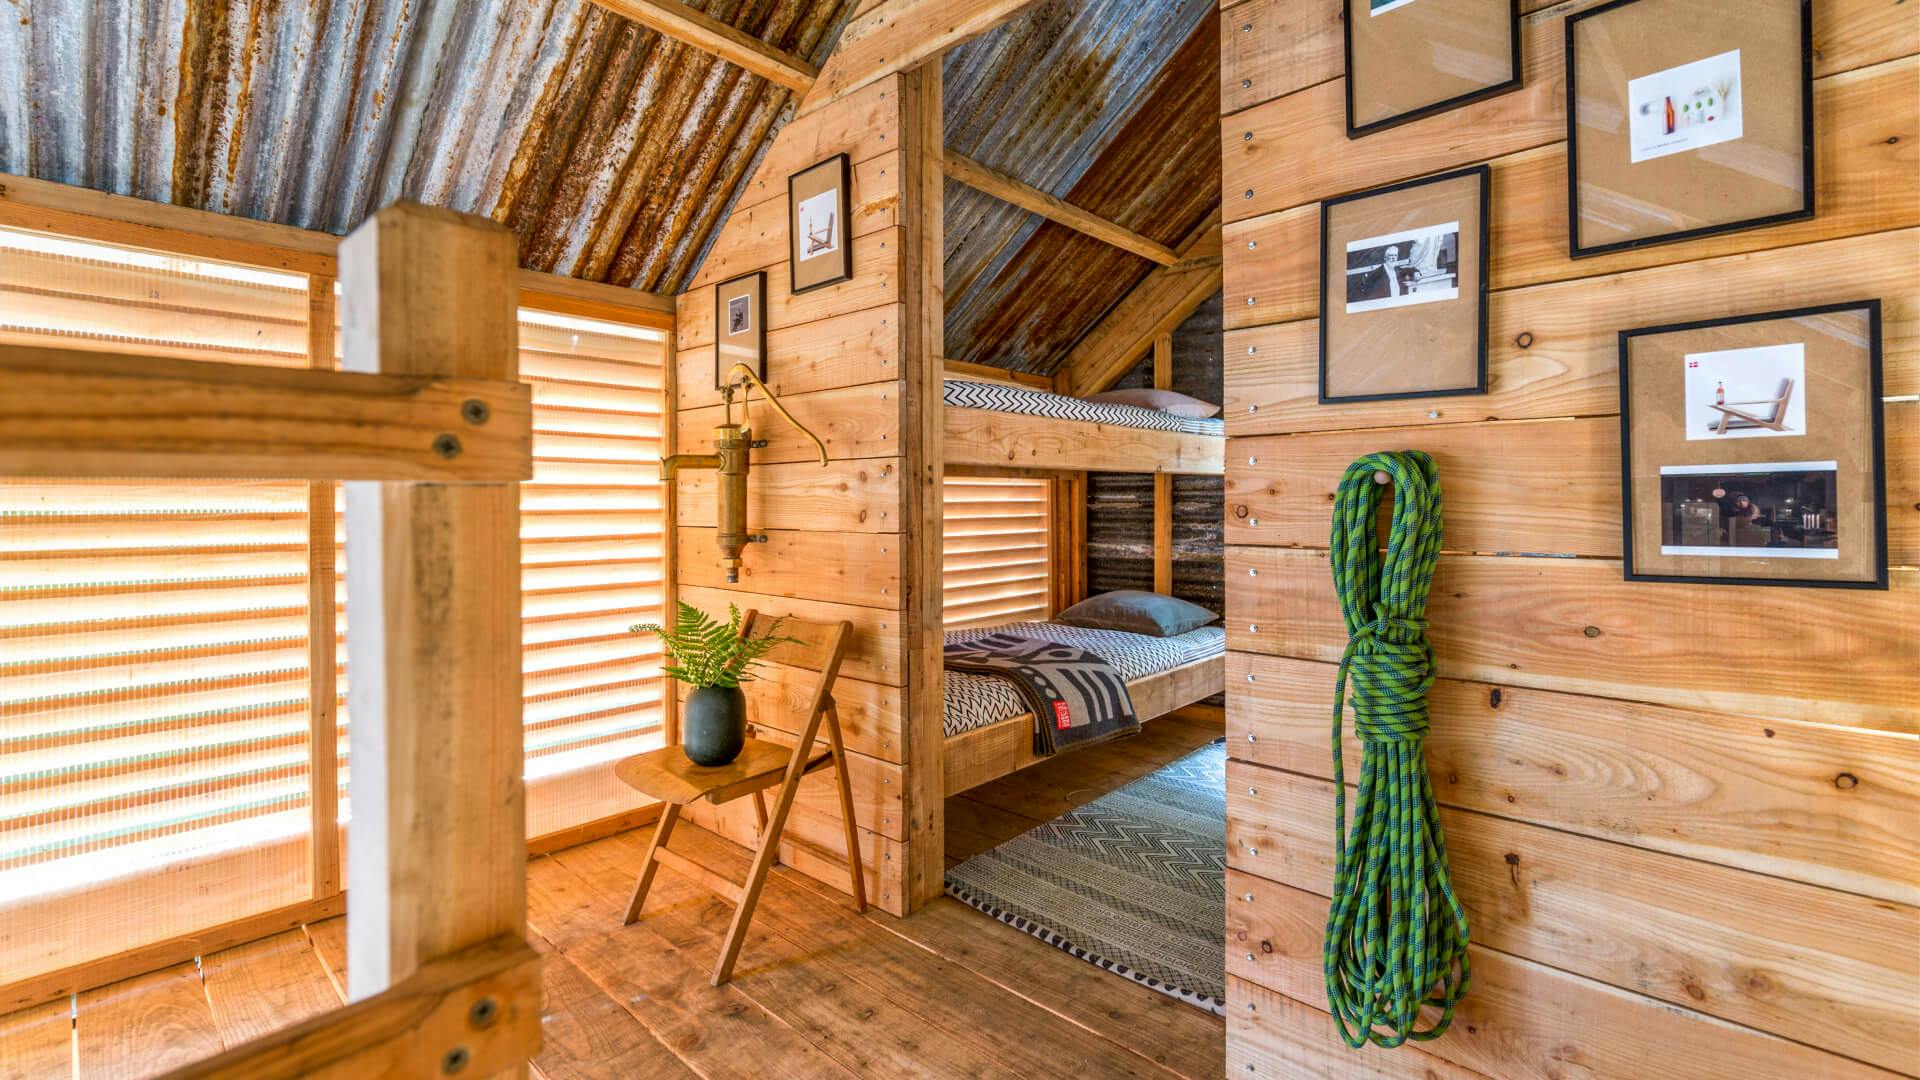 Inside wooden cabin - Carlsberg The Cabin